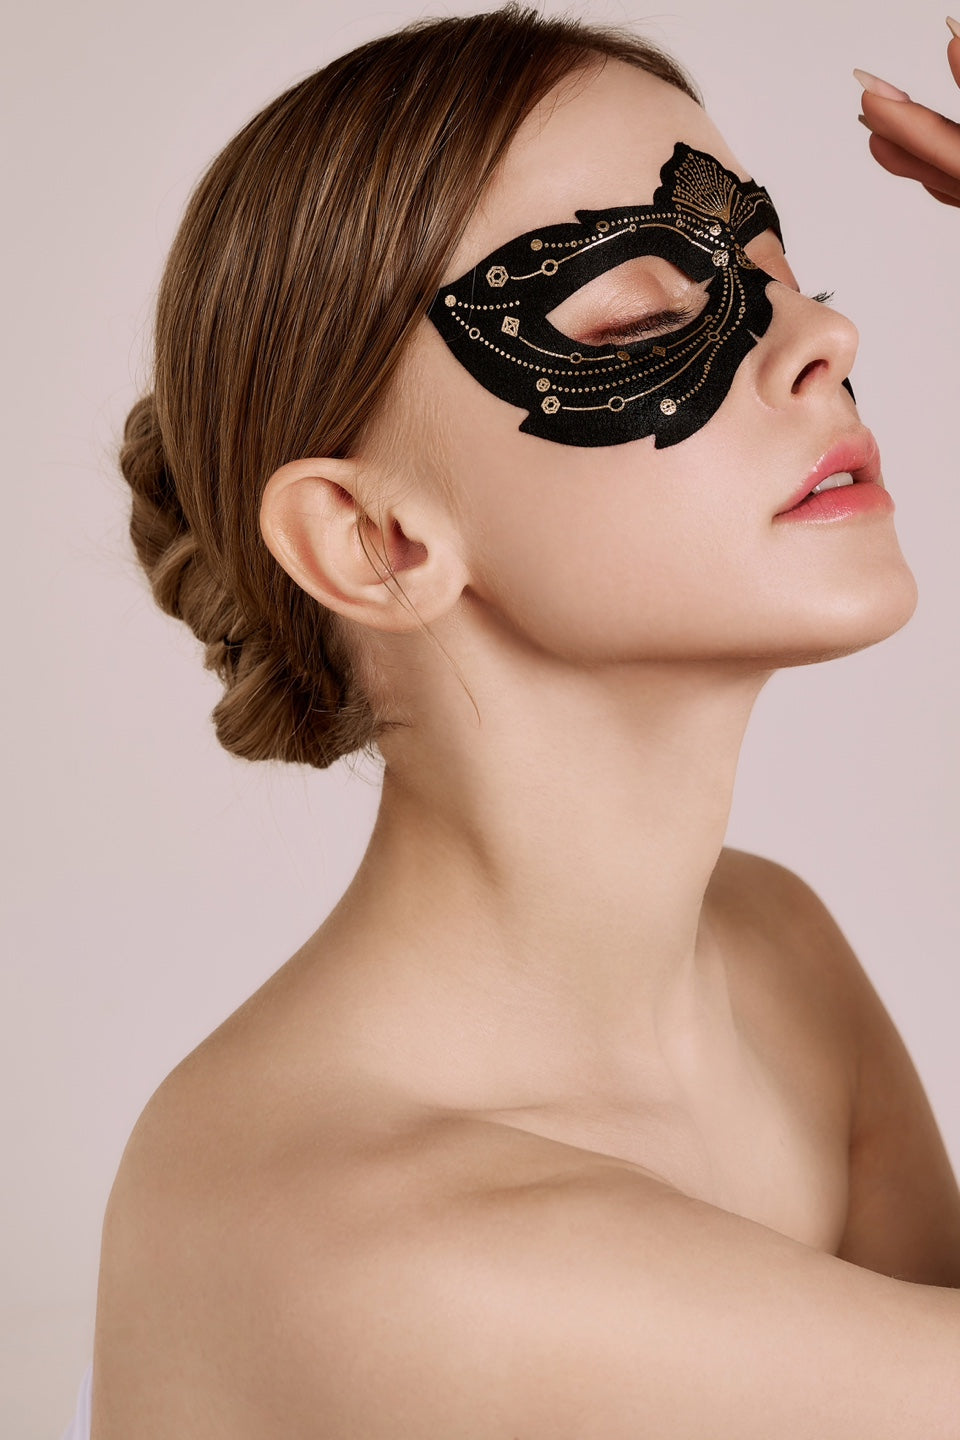 KISSMUSES Anti-Winkle Eye Lifting Masks Fine lines Ageing Crows Feet